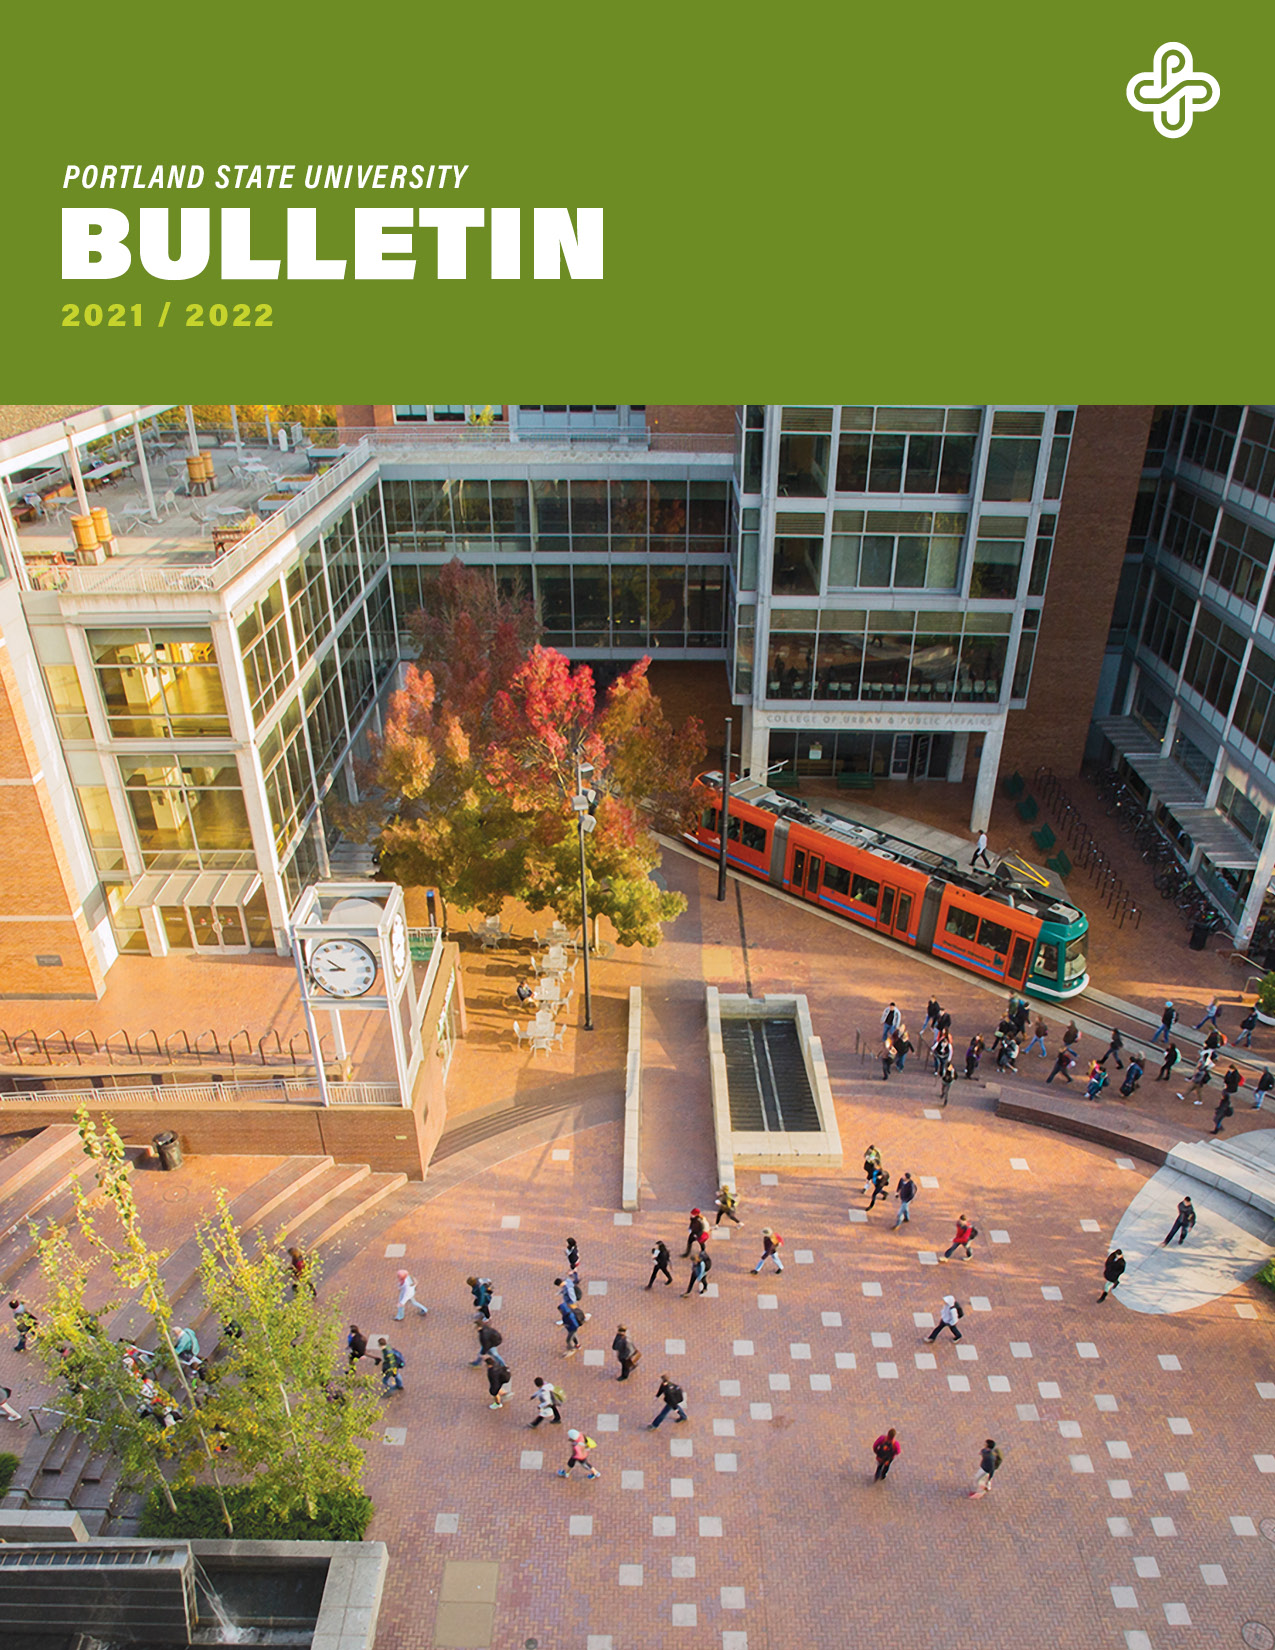 PSU Bulletin Cover: Urban Plaza at Portland State University